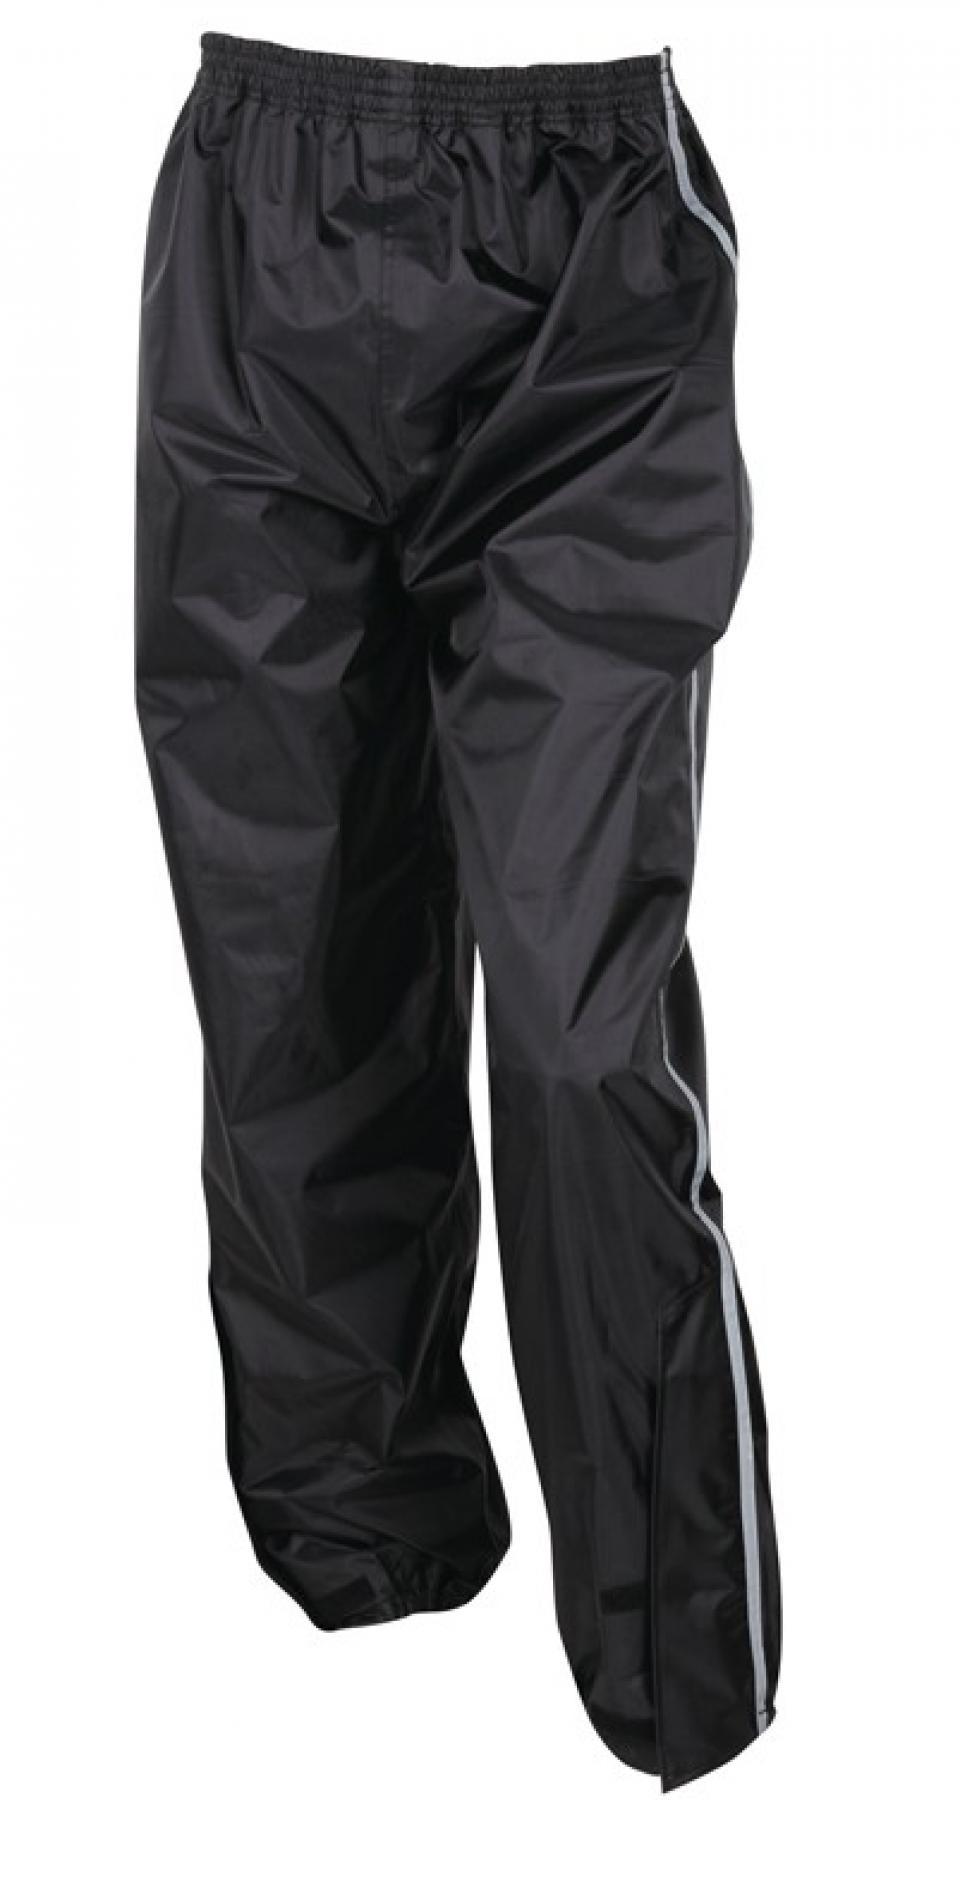 Pantalon pour moto route Mad Homme / Femme MAD Taille XL Neuf